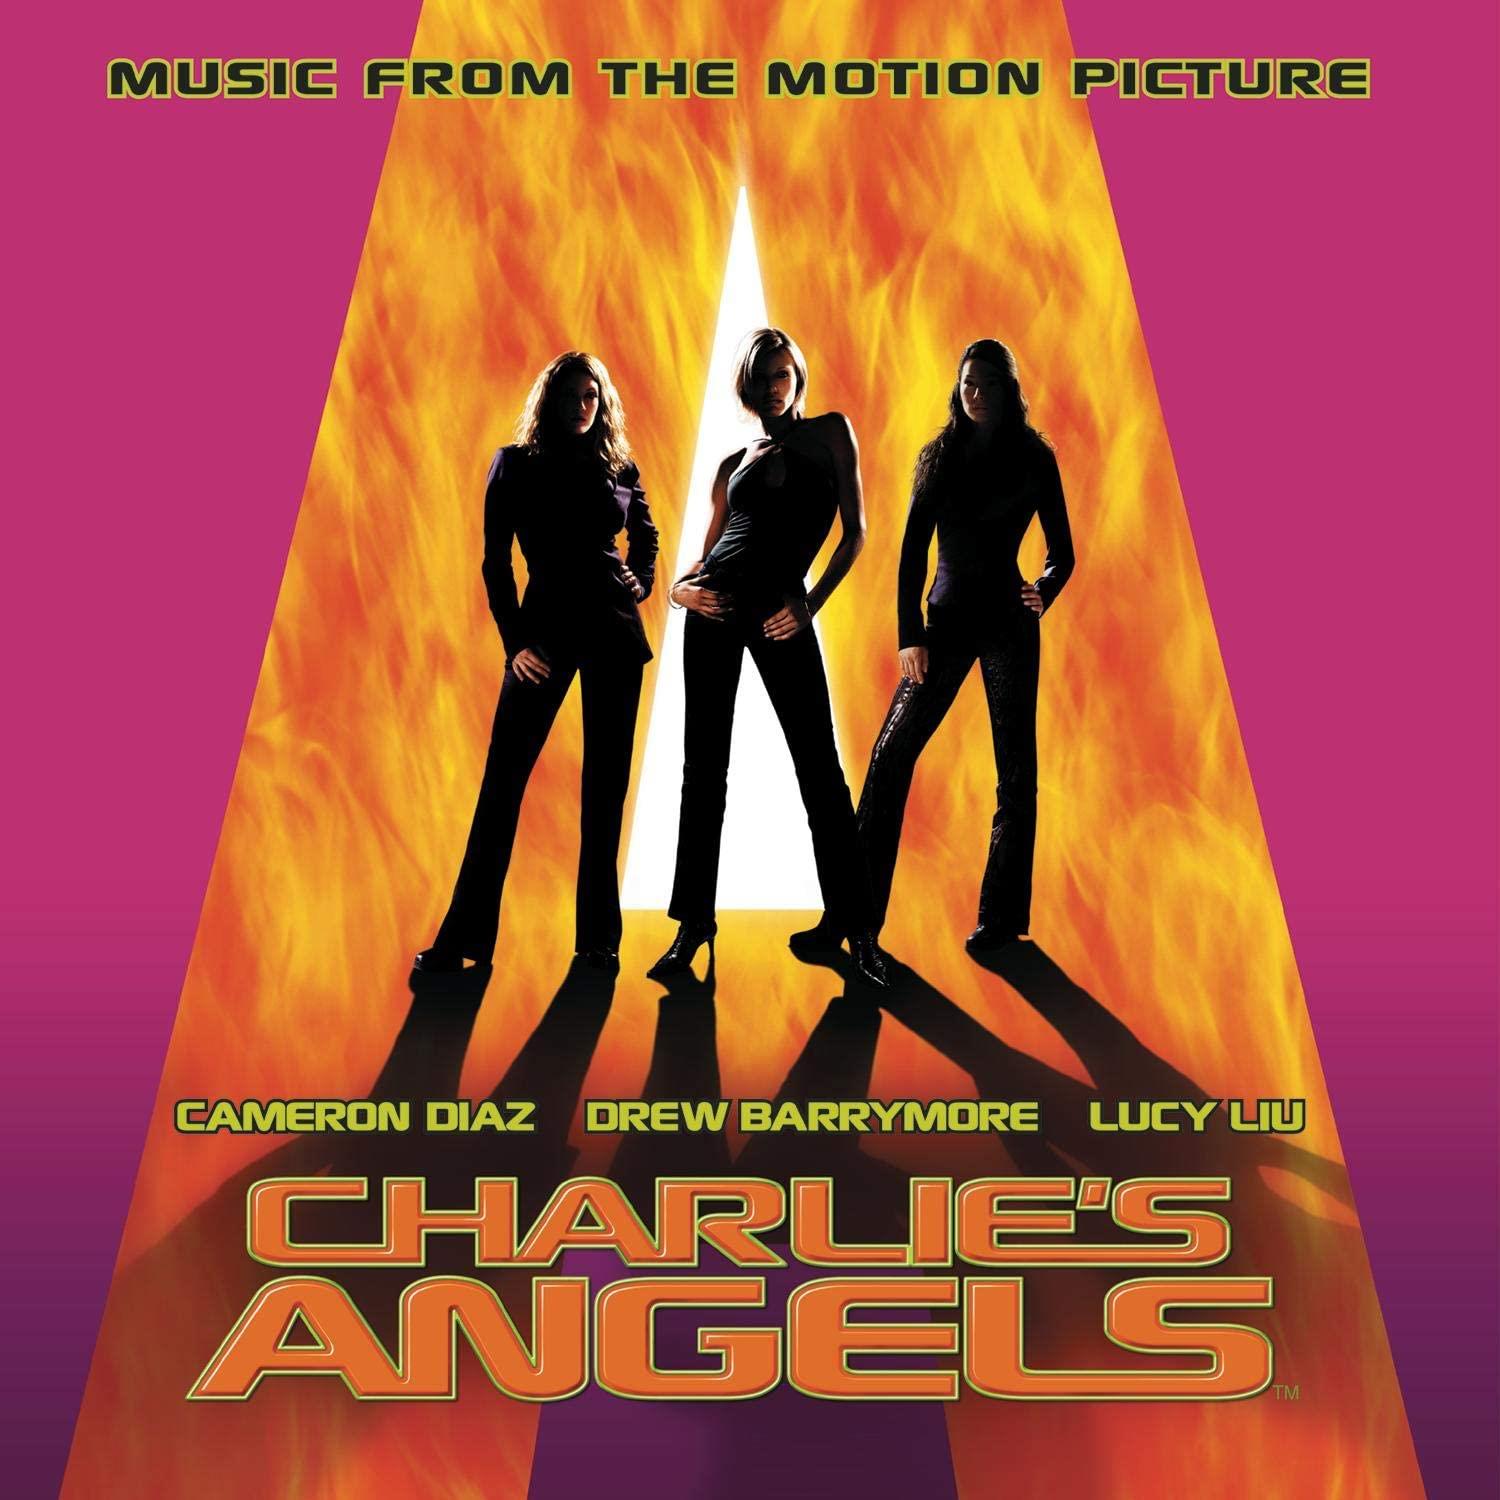 CHARLIE'S ANGELS/Tg mIWỉ摜EWPbgʐ^